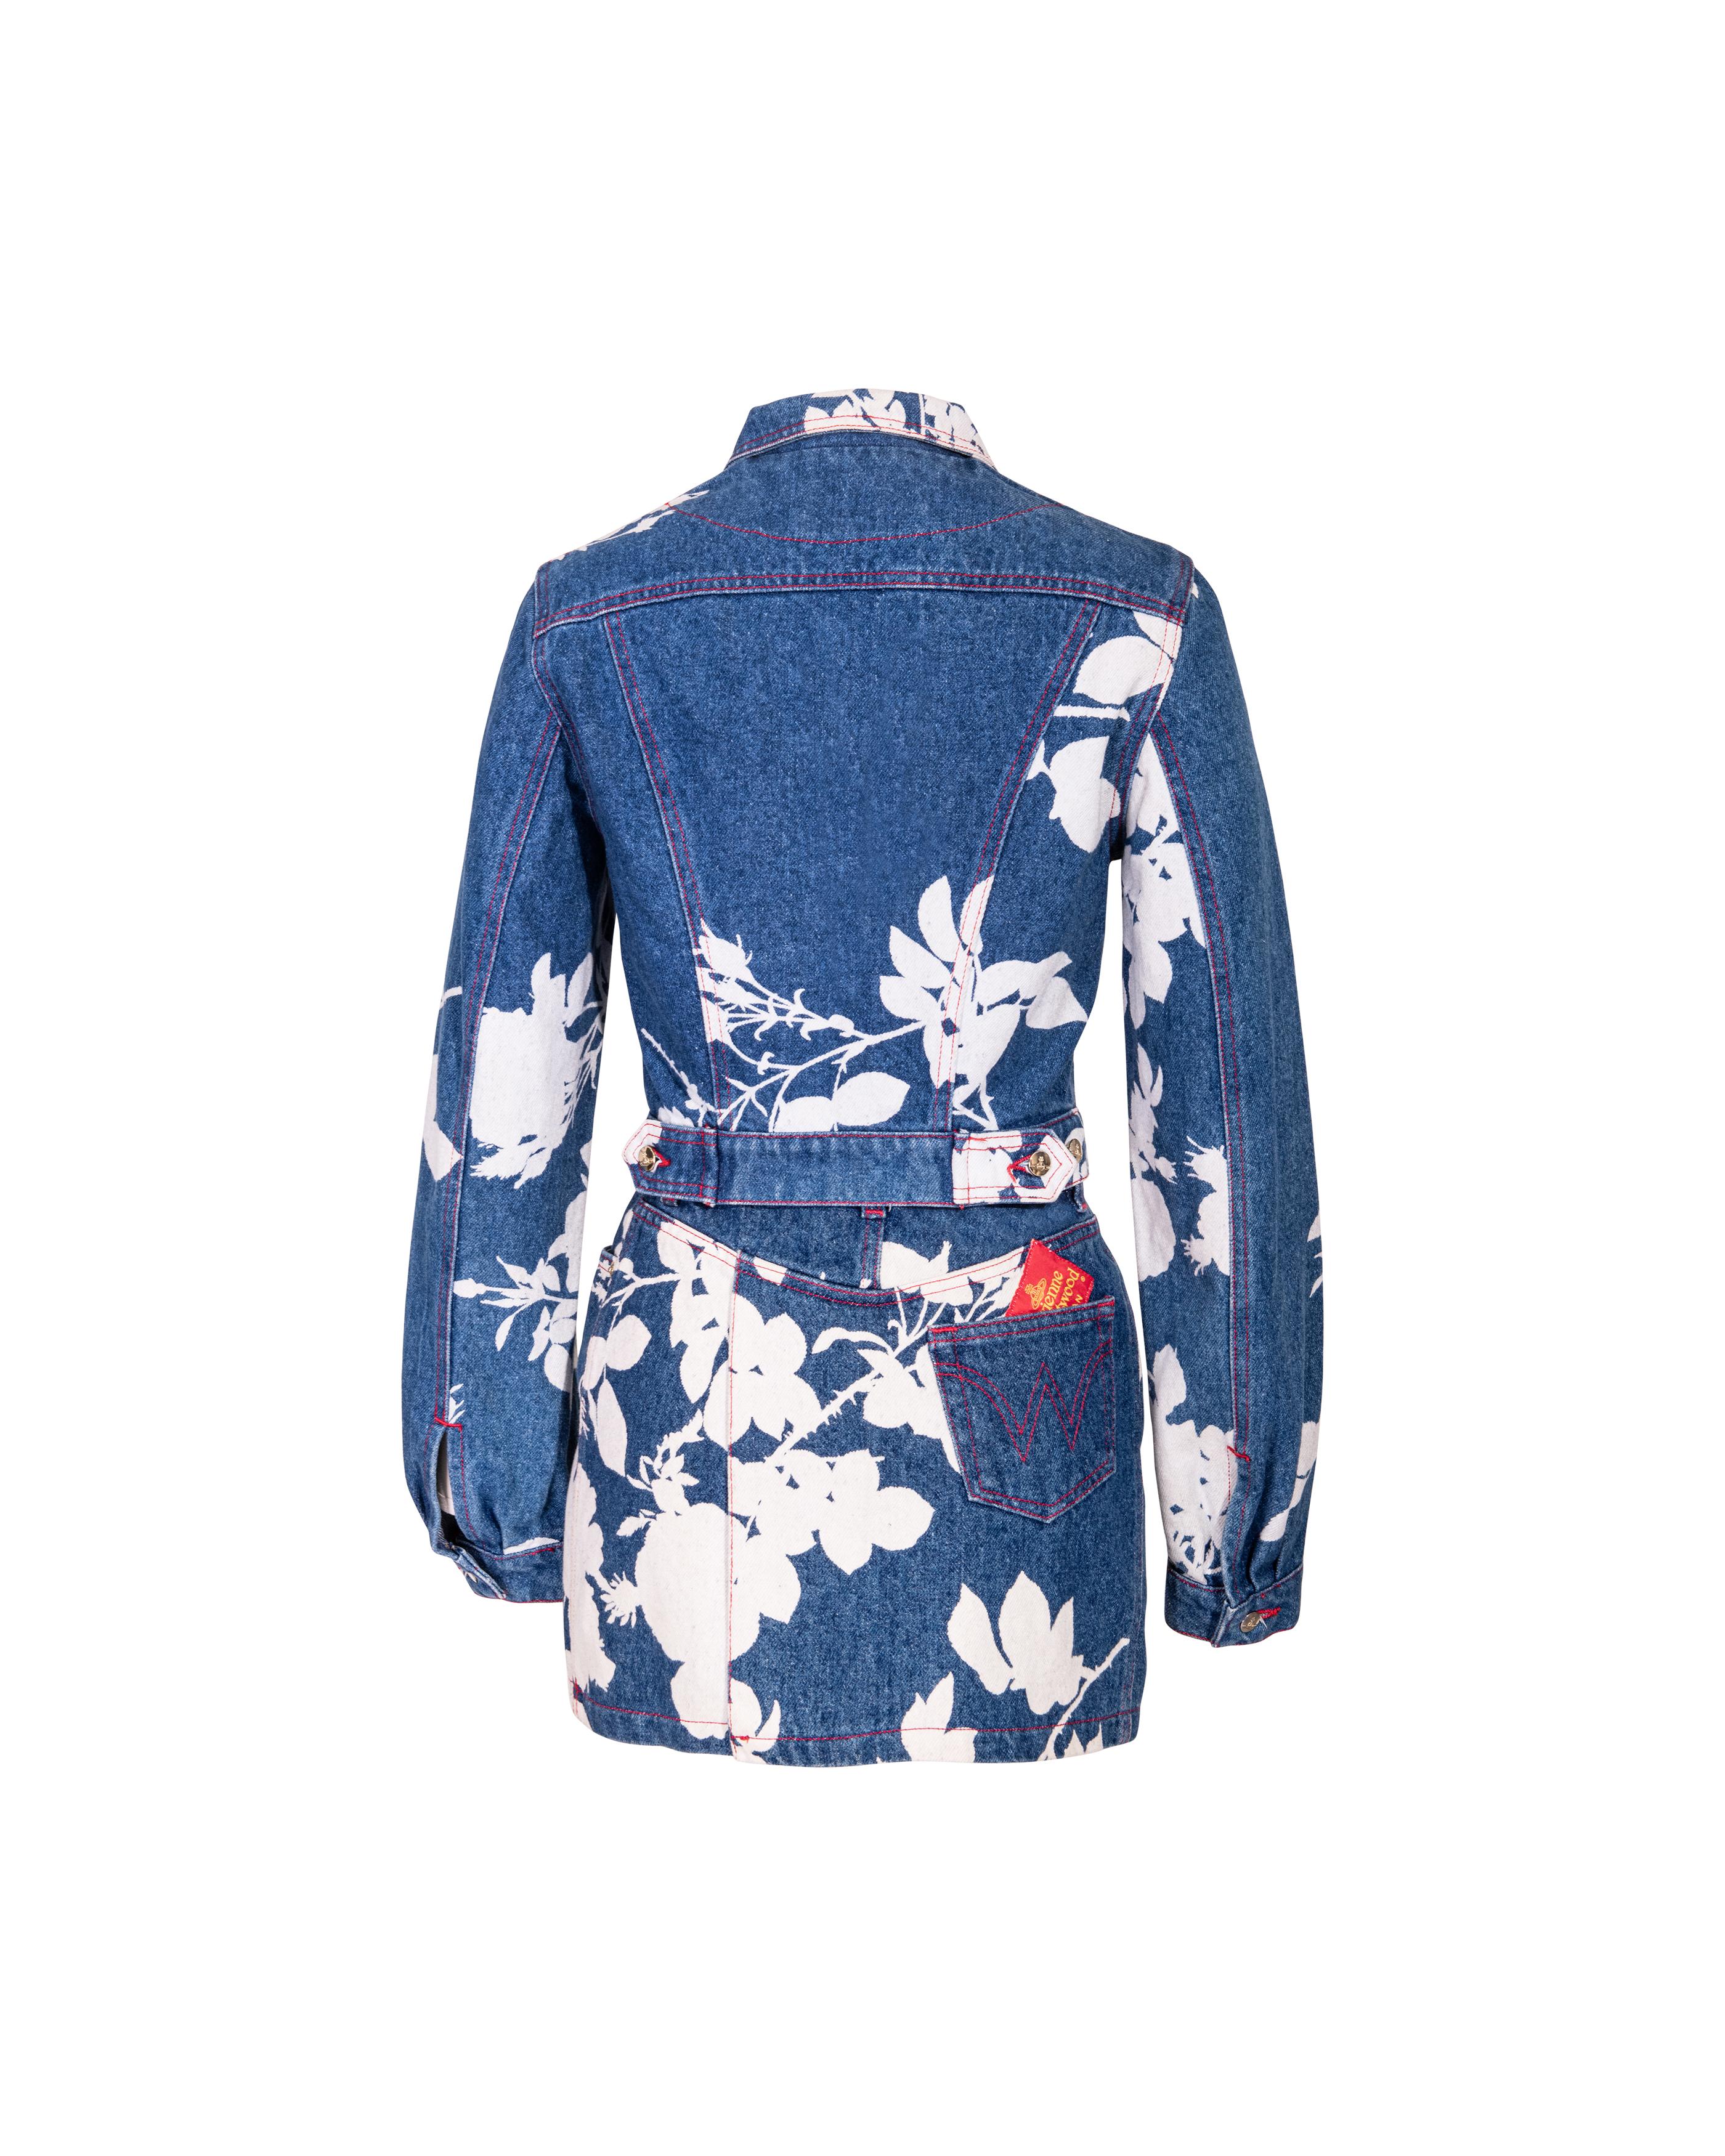 Blue S/S 1994 Vivienne Westwood Denim Skirt Set with Bleached Floral Pattern For Sale